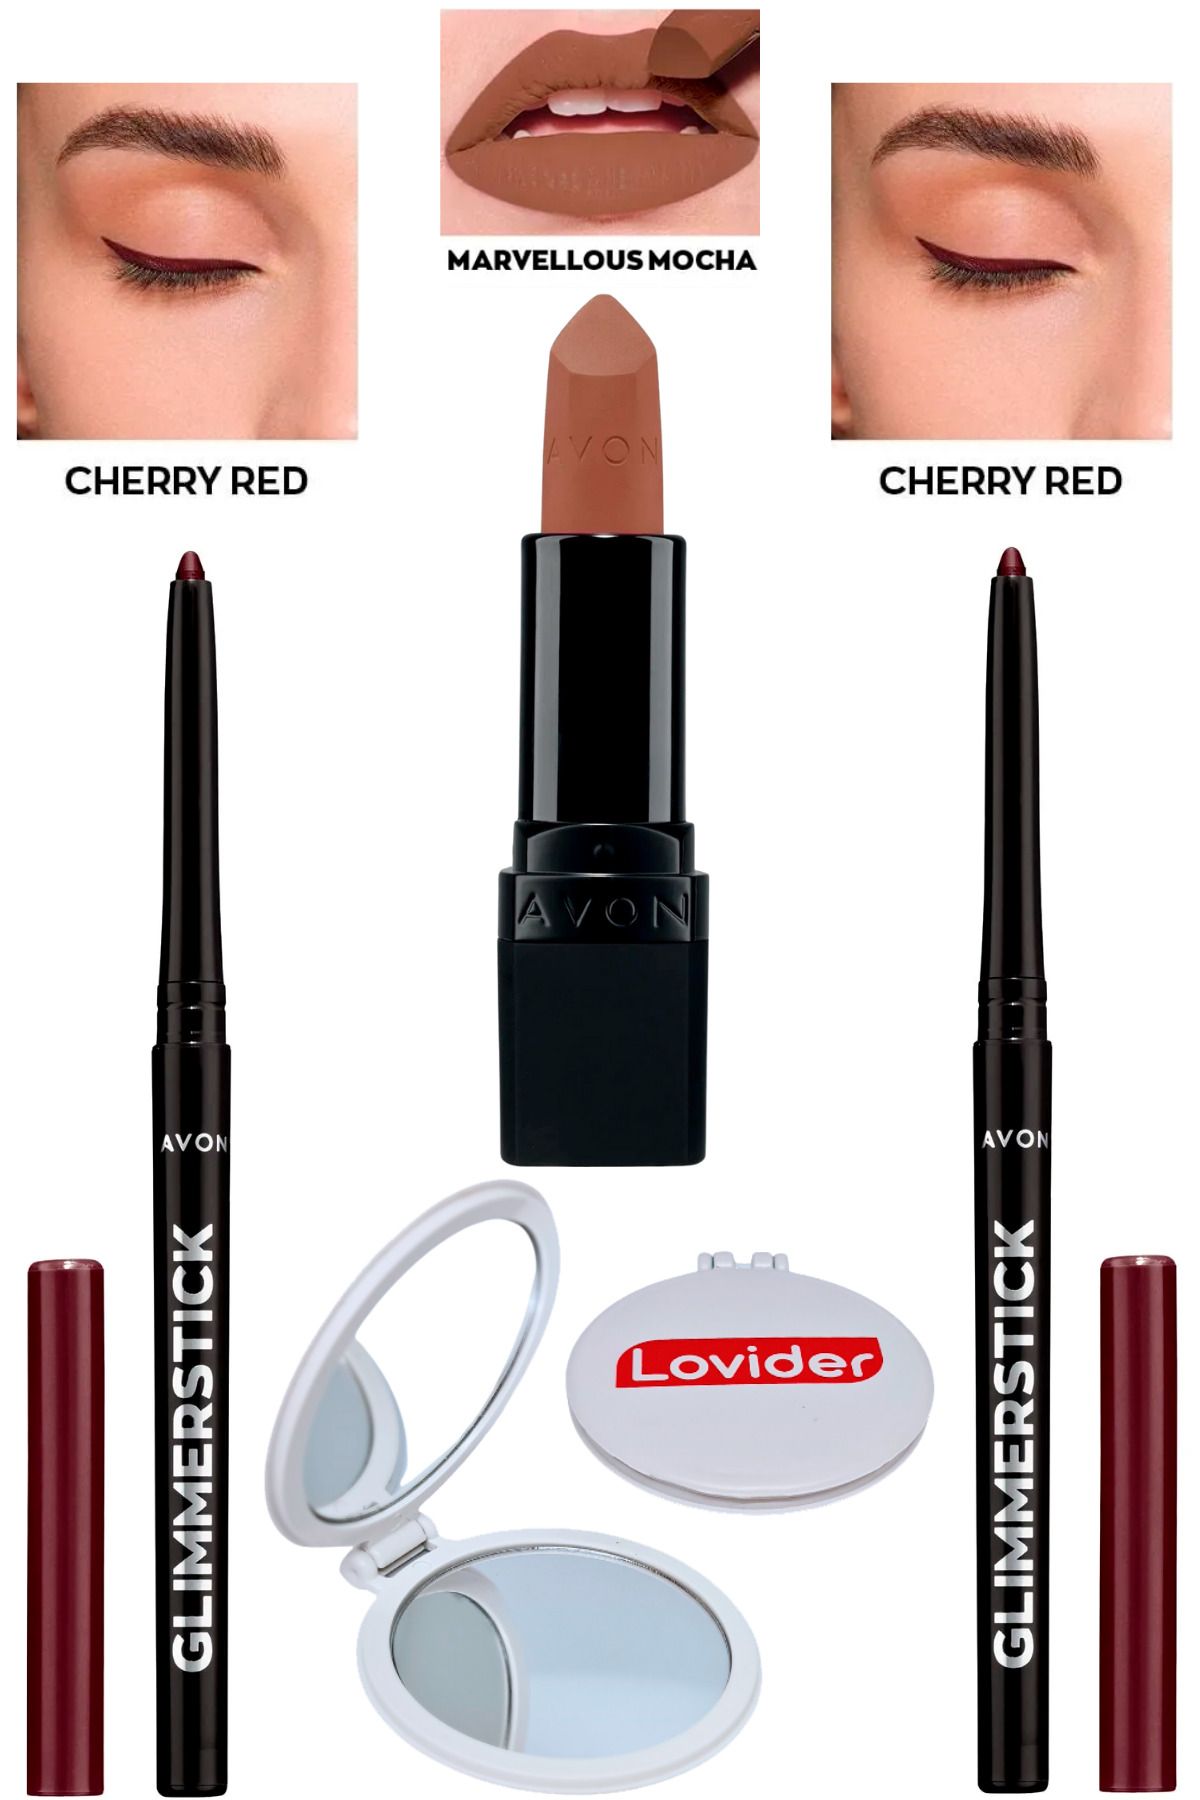 Avon Asansörlü Göz Kalemi Cherry Red 2'li + Marvellous Mocha Mat Ruj + Lovider Cep Aynası